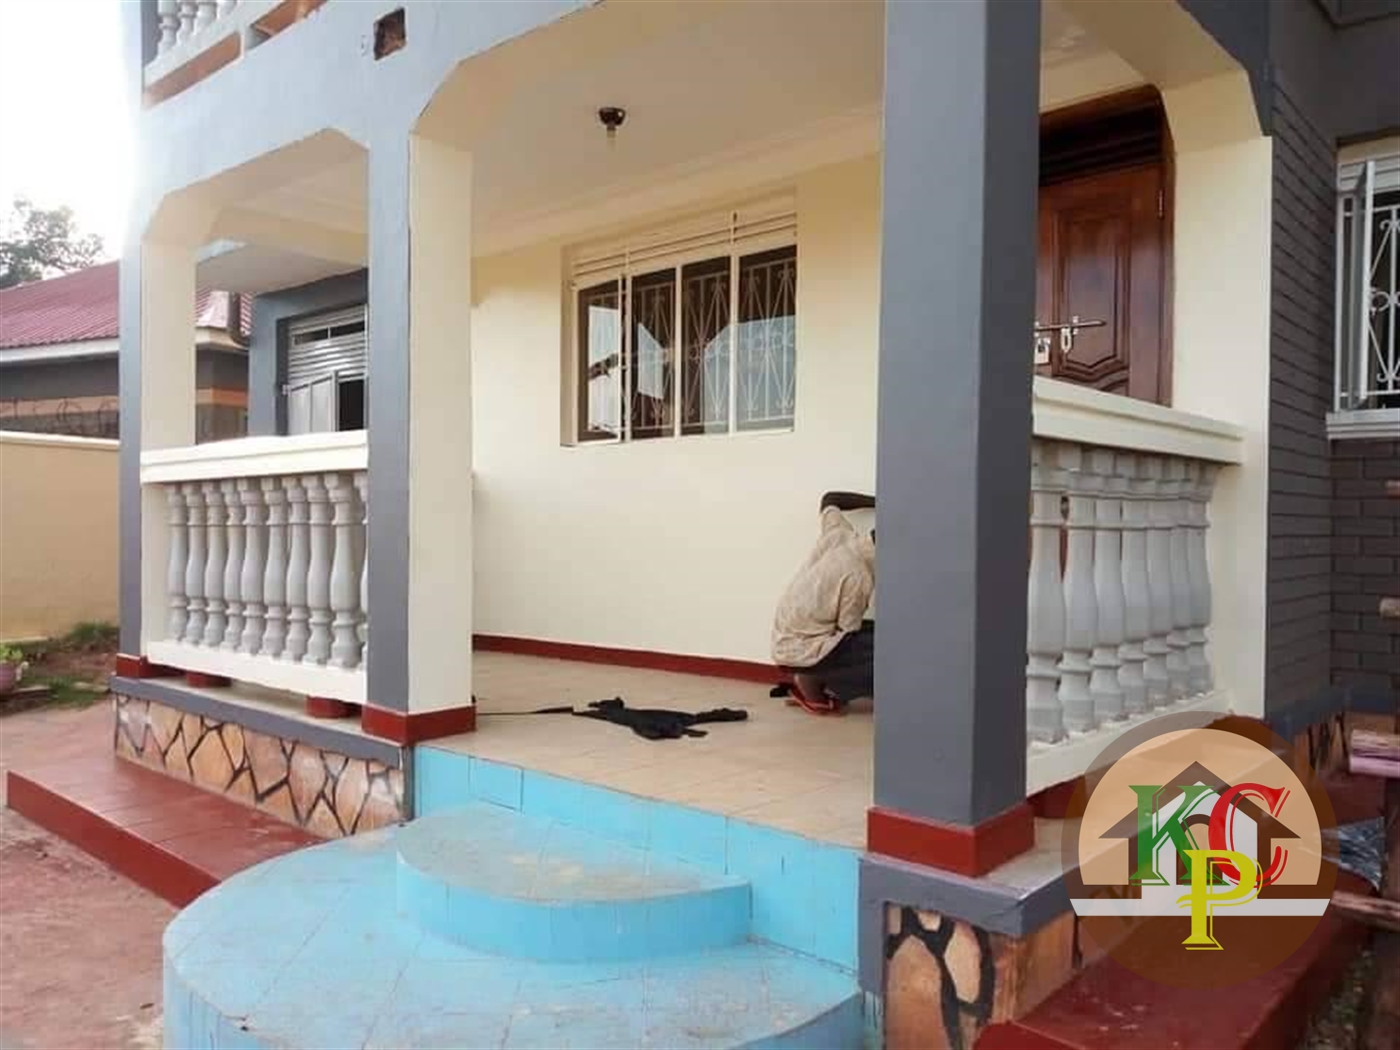 Mansion for sale in Kabalagala Kampala